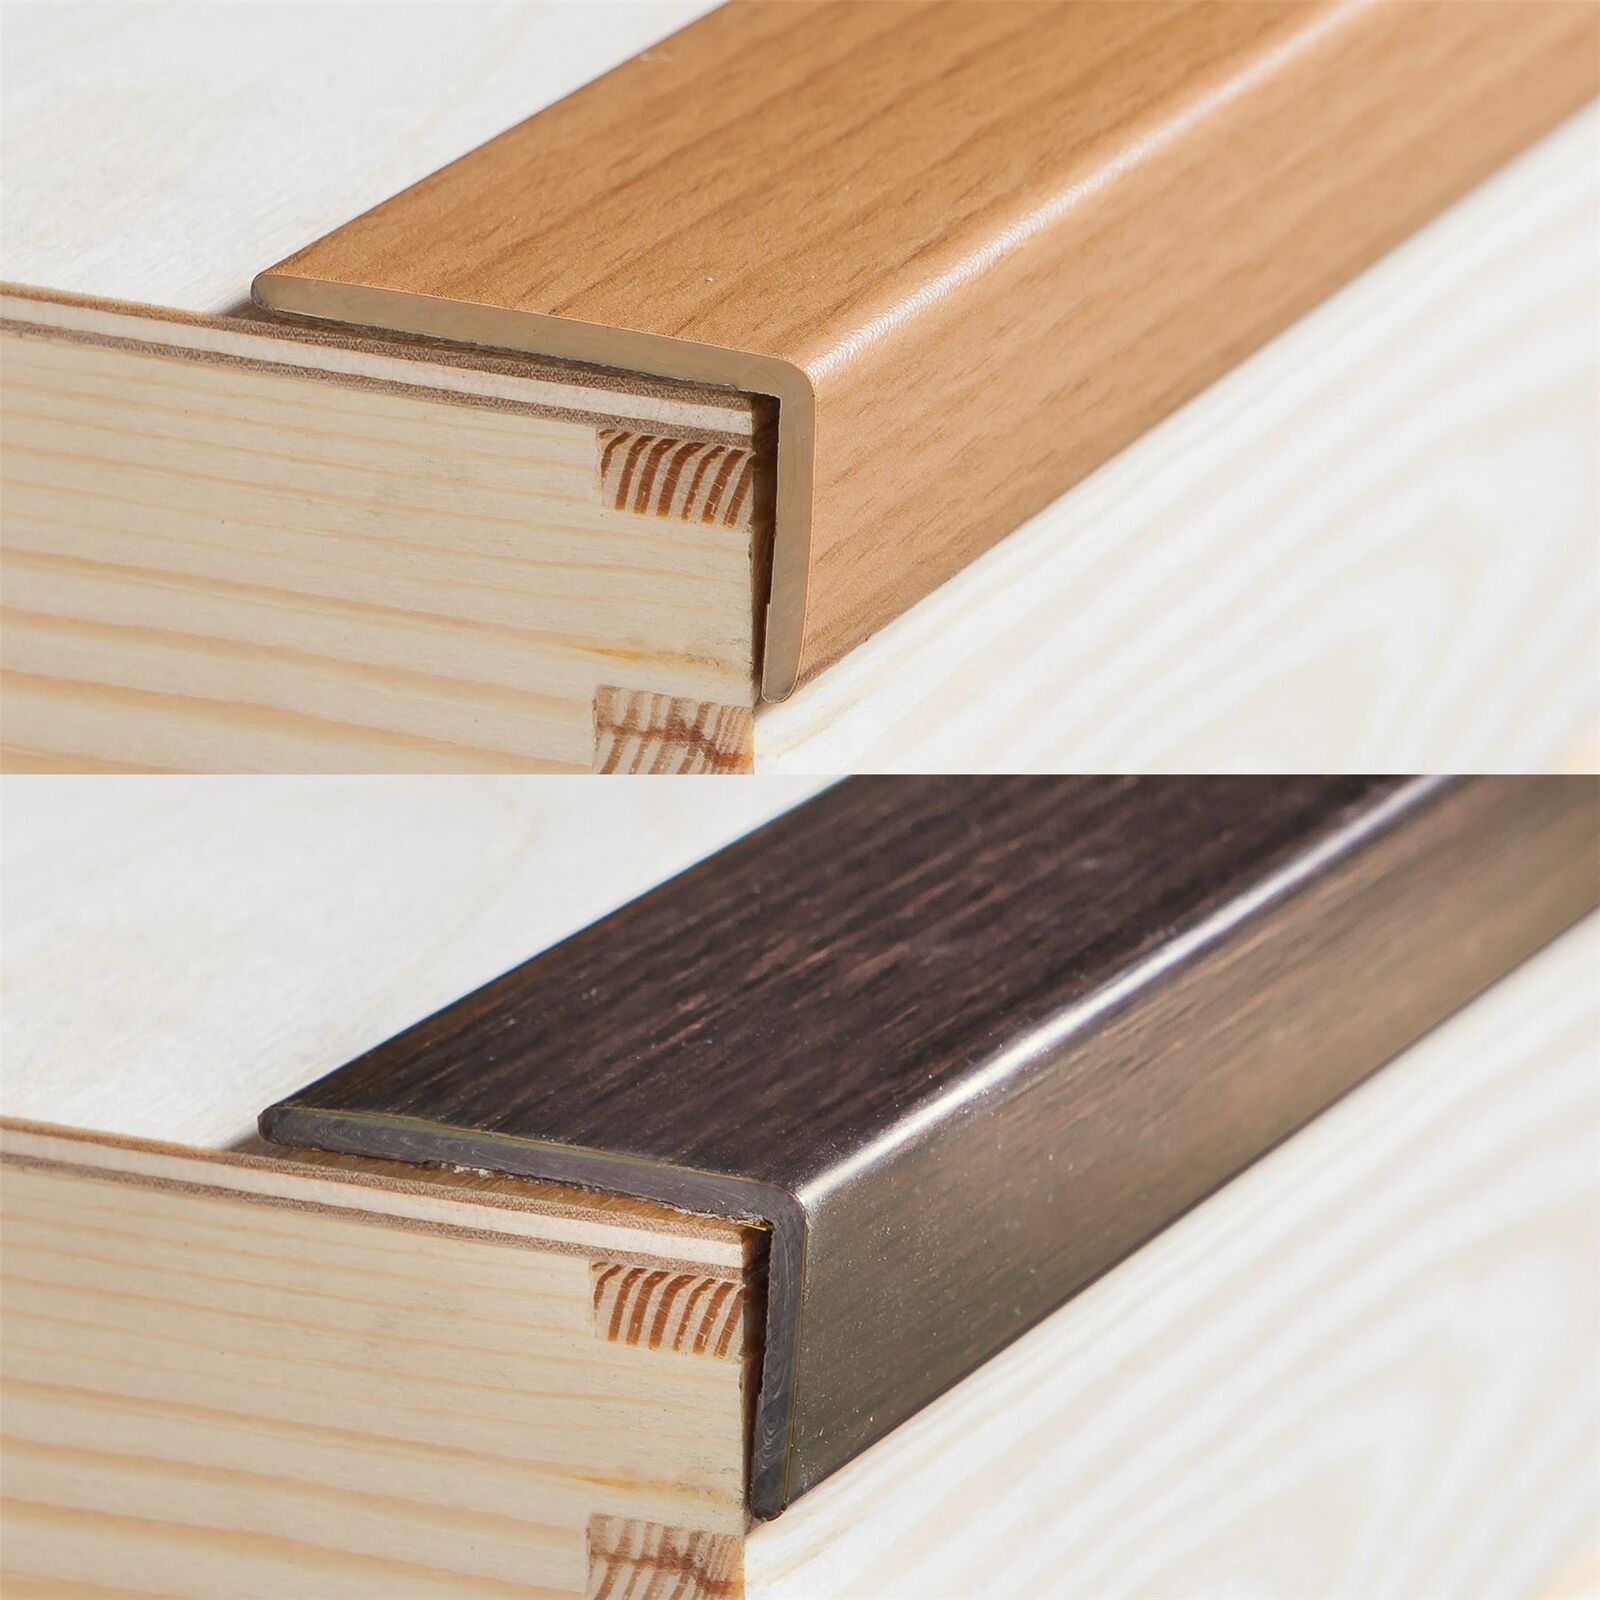 1m Long Upvc Wood Effect Stair Edge Nosing Trim Pvc Self-Adhesive - Floor Safety Store